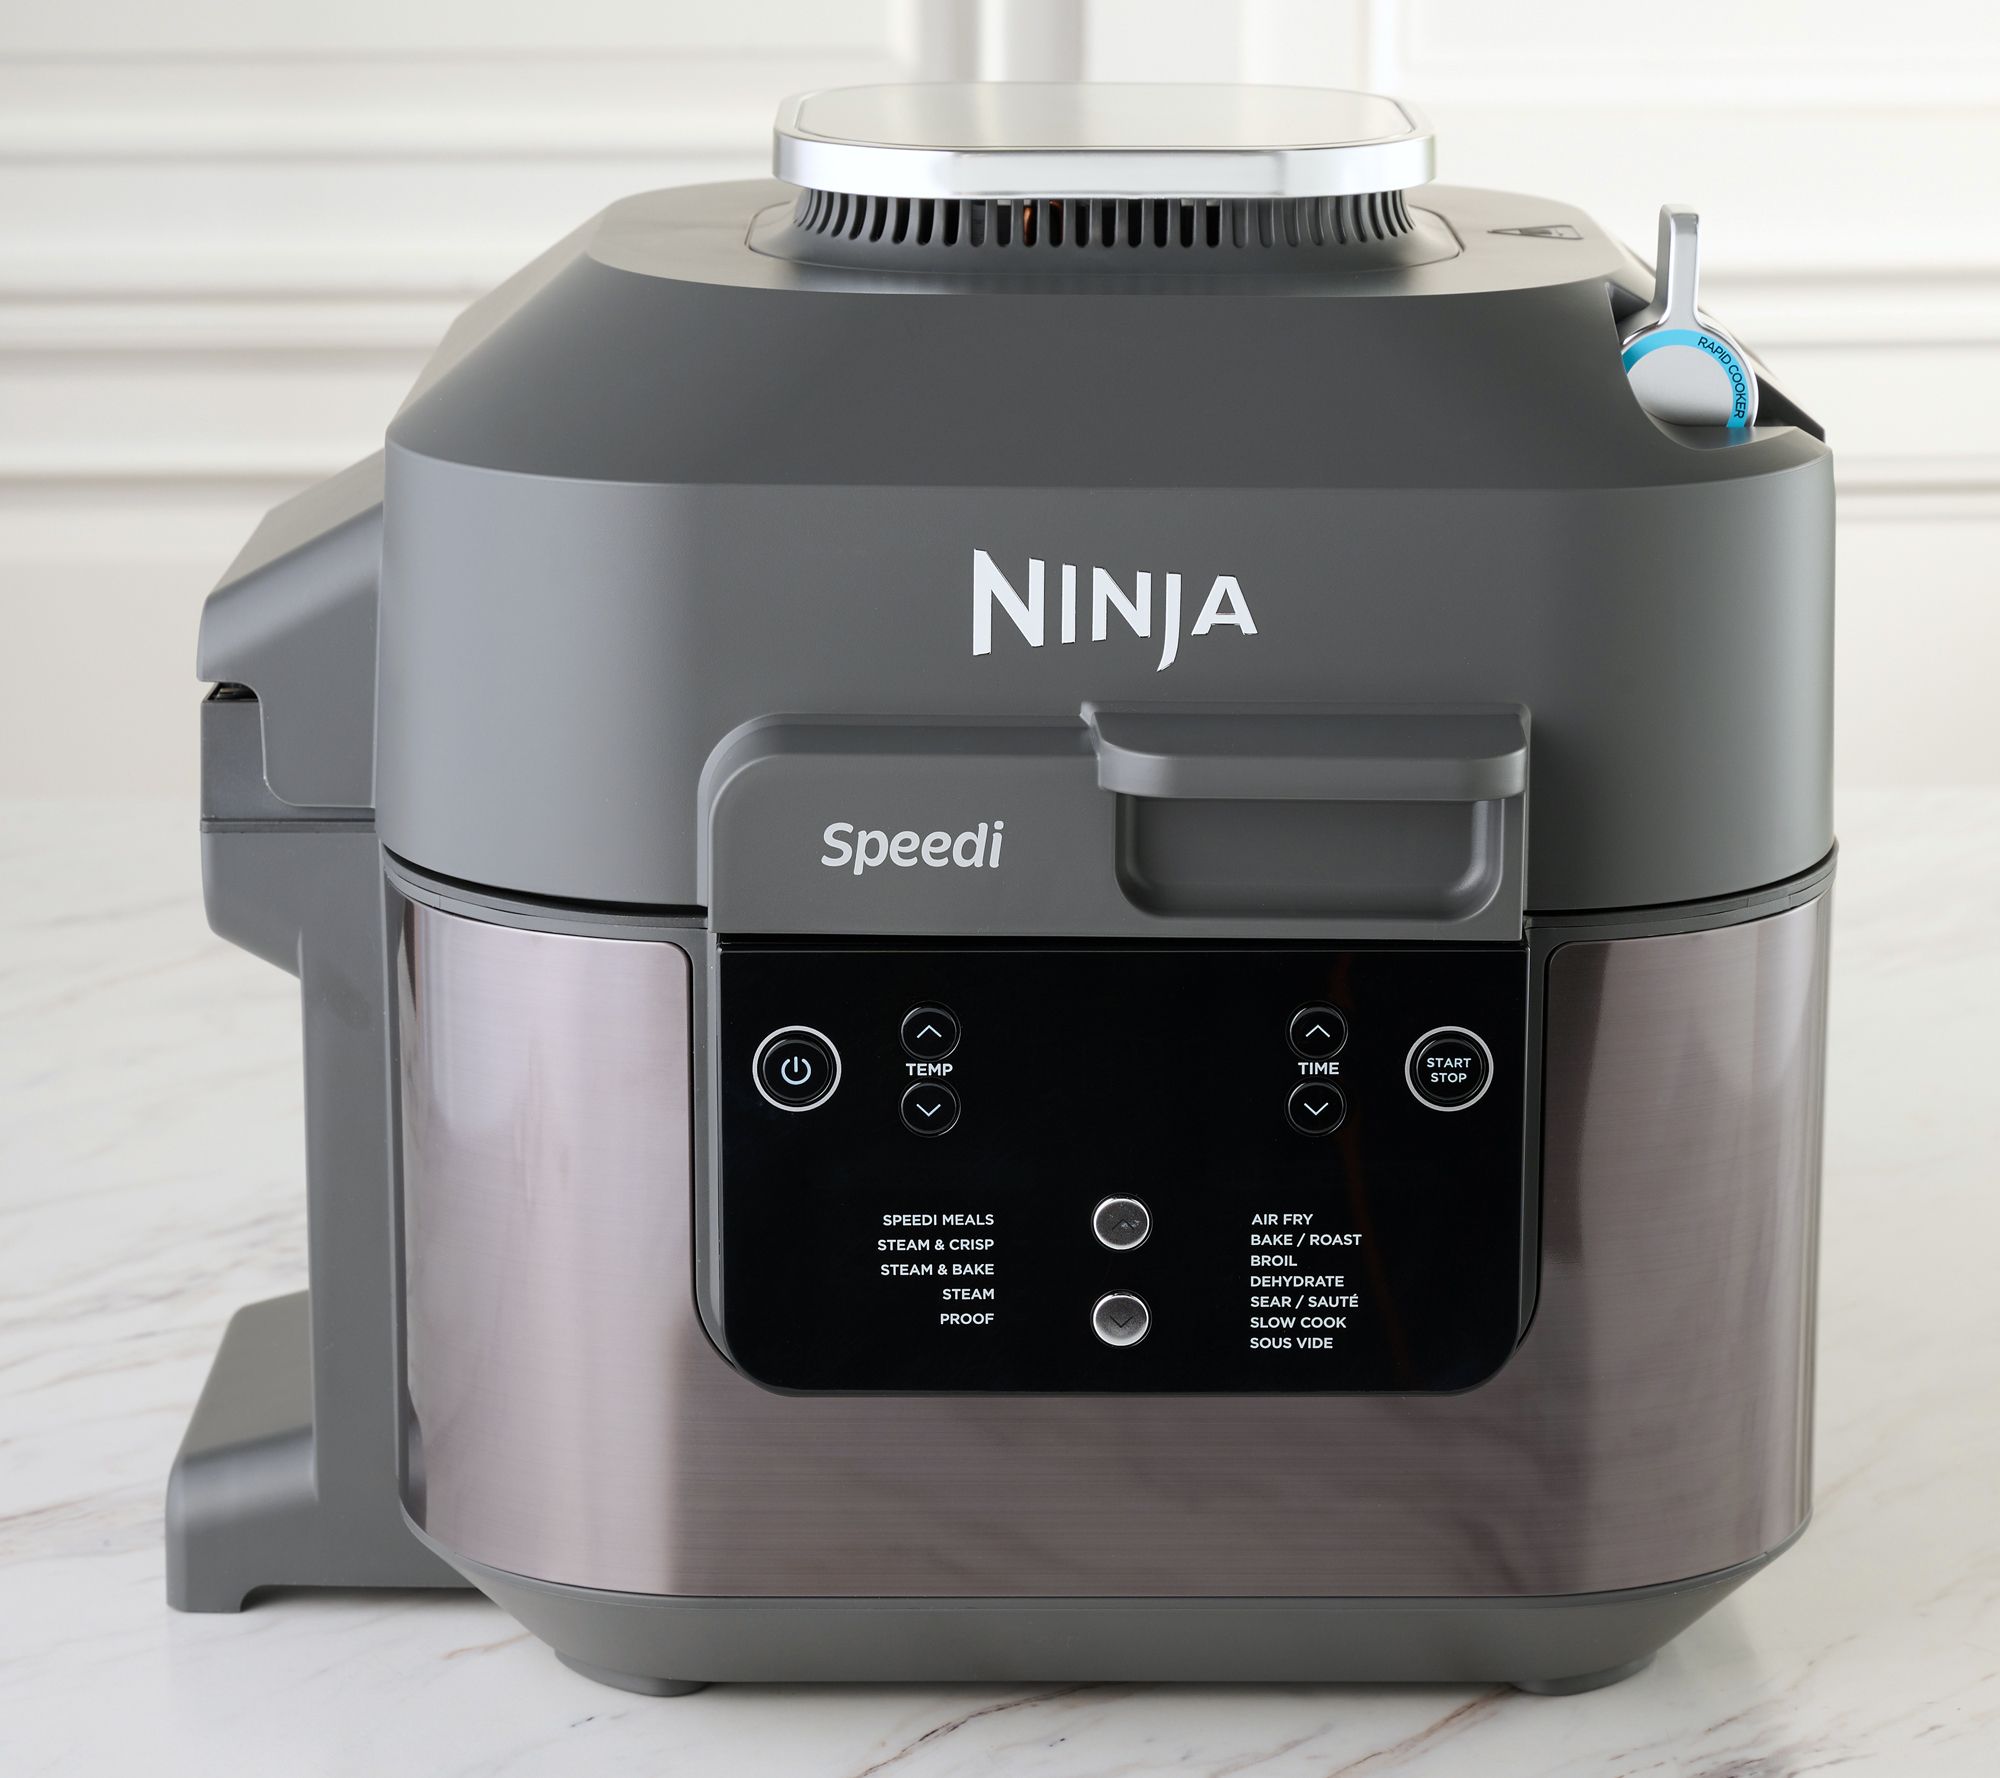 Ninja Speedi Rapid Cooker and Air Fryer, Sf300, 6-Qt. Capacity, 10-in-1 Functionality, Meal Maker, Sea Salt Gray